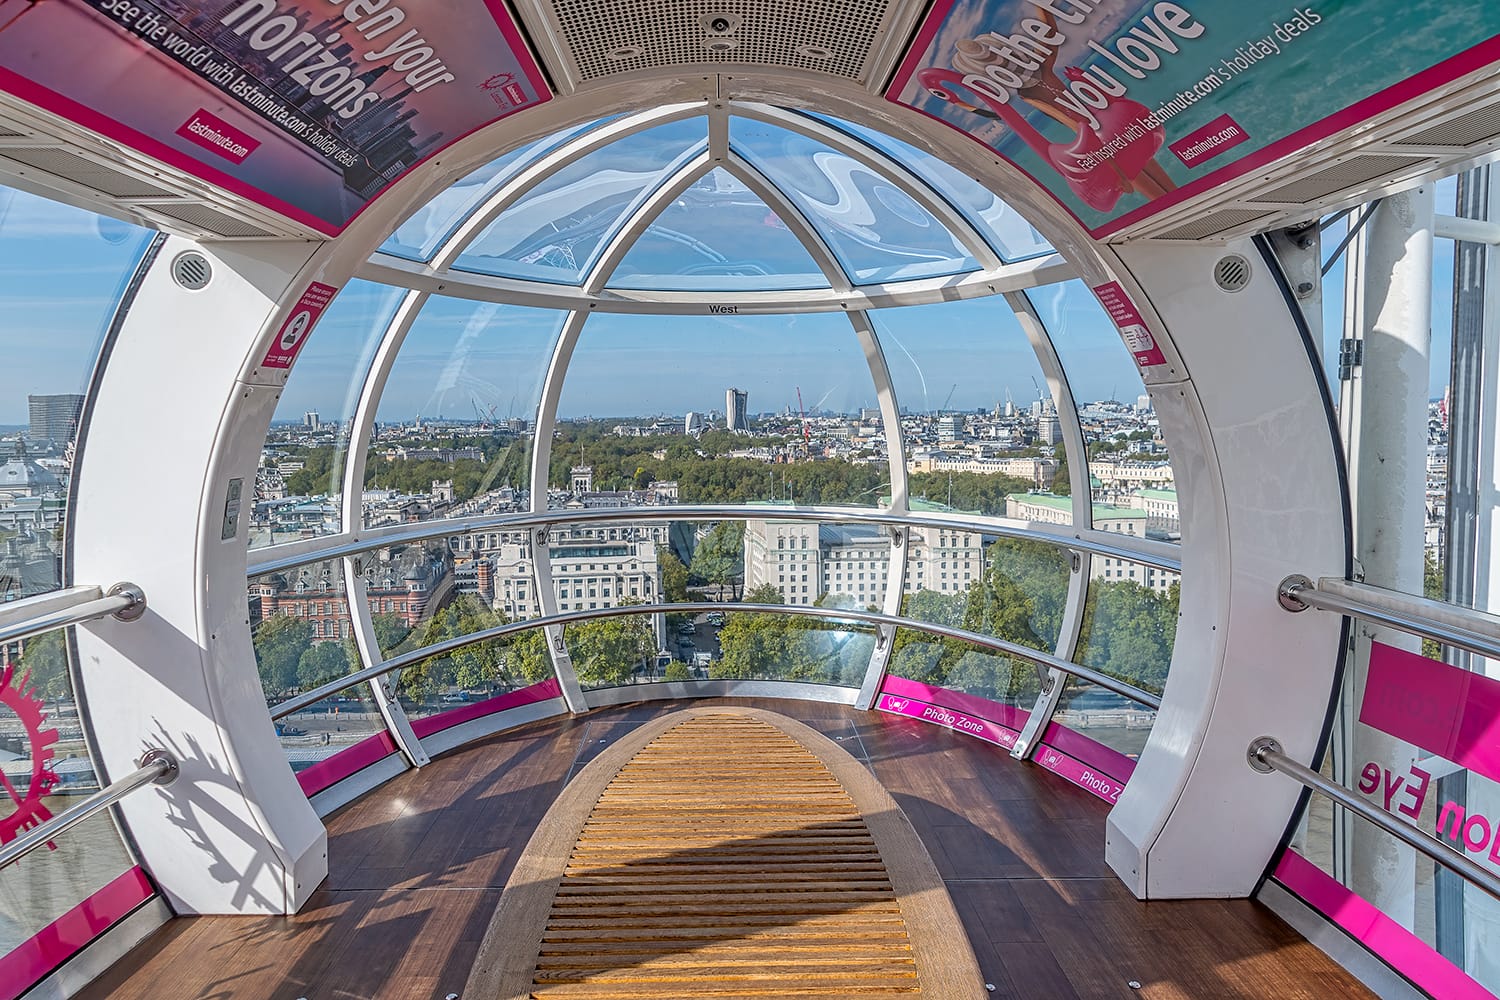 Inside view of a capsule on the London Eye ferris wheel